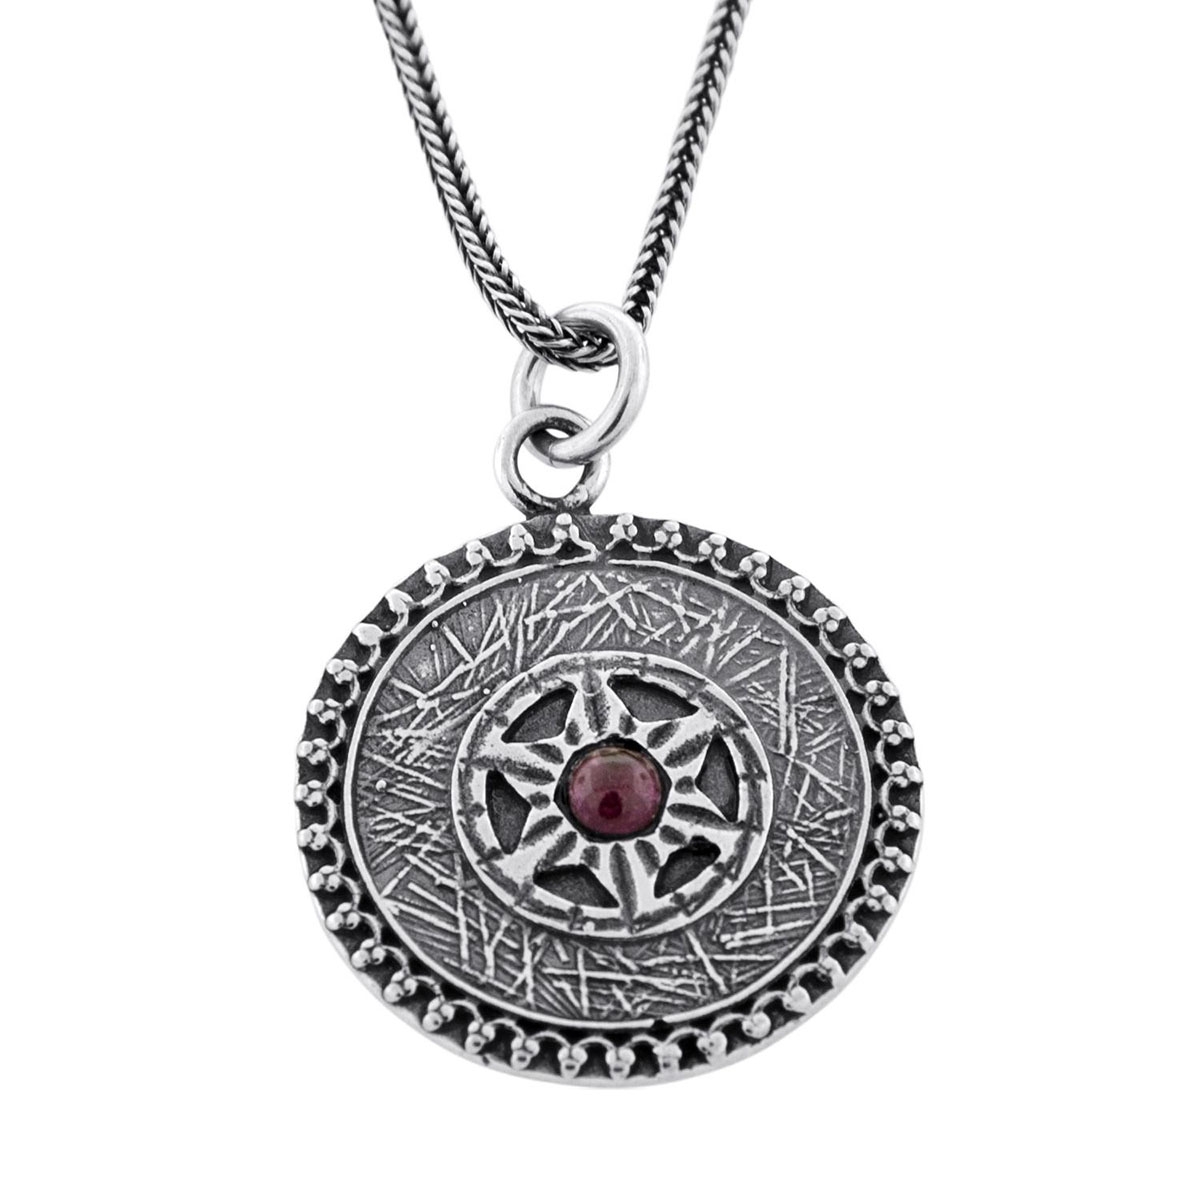 Ana Bekoach: Ornate Silver Necklace with Star of David & Garnet - 1